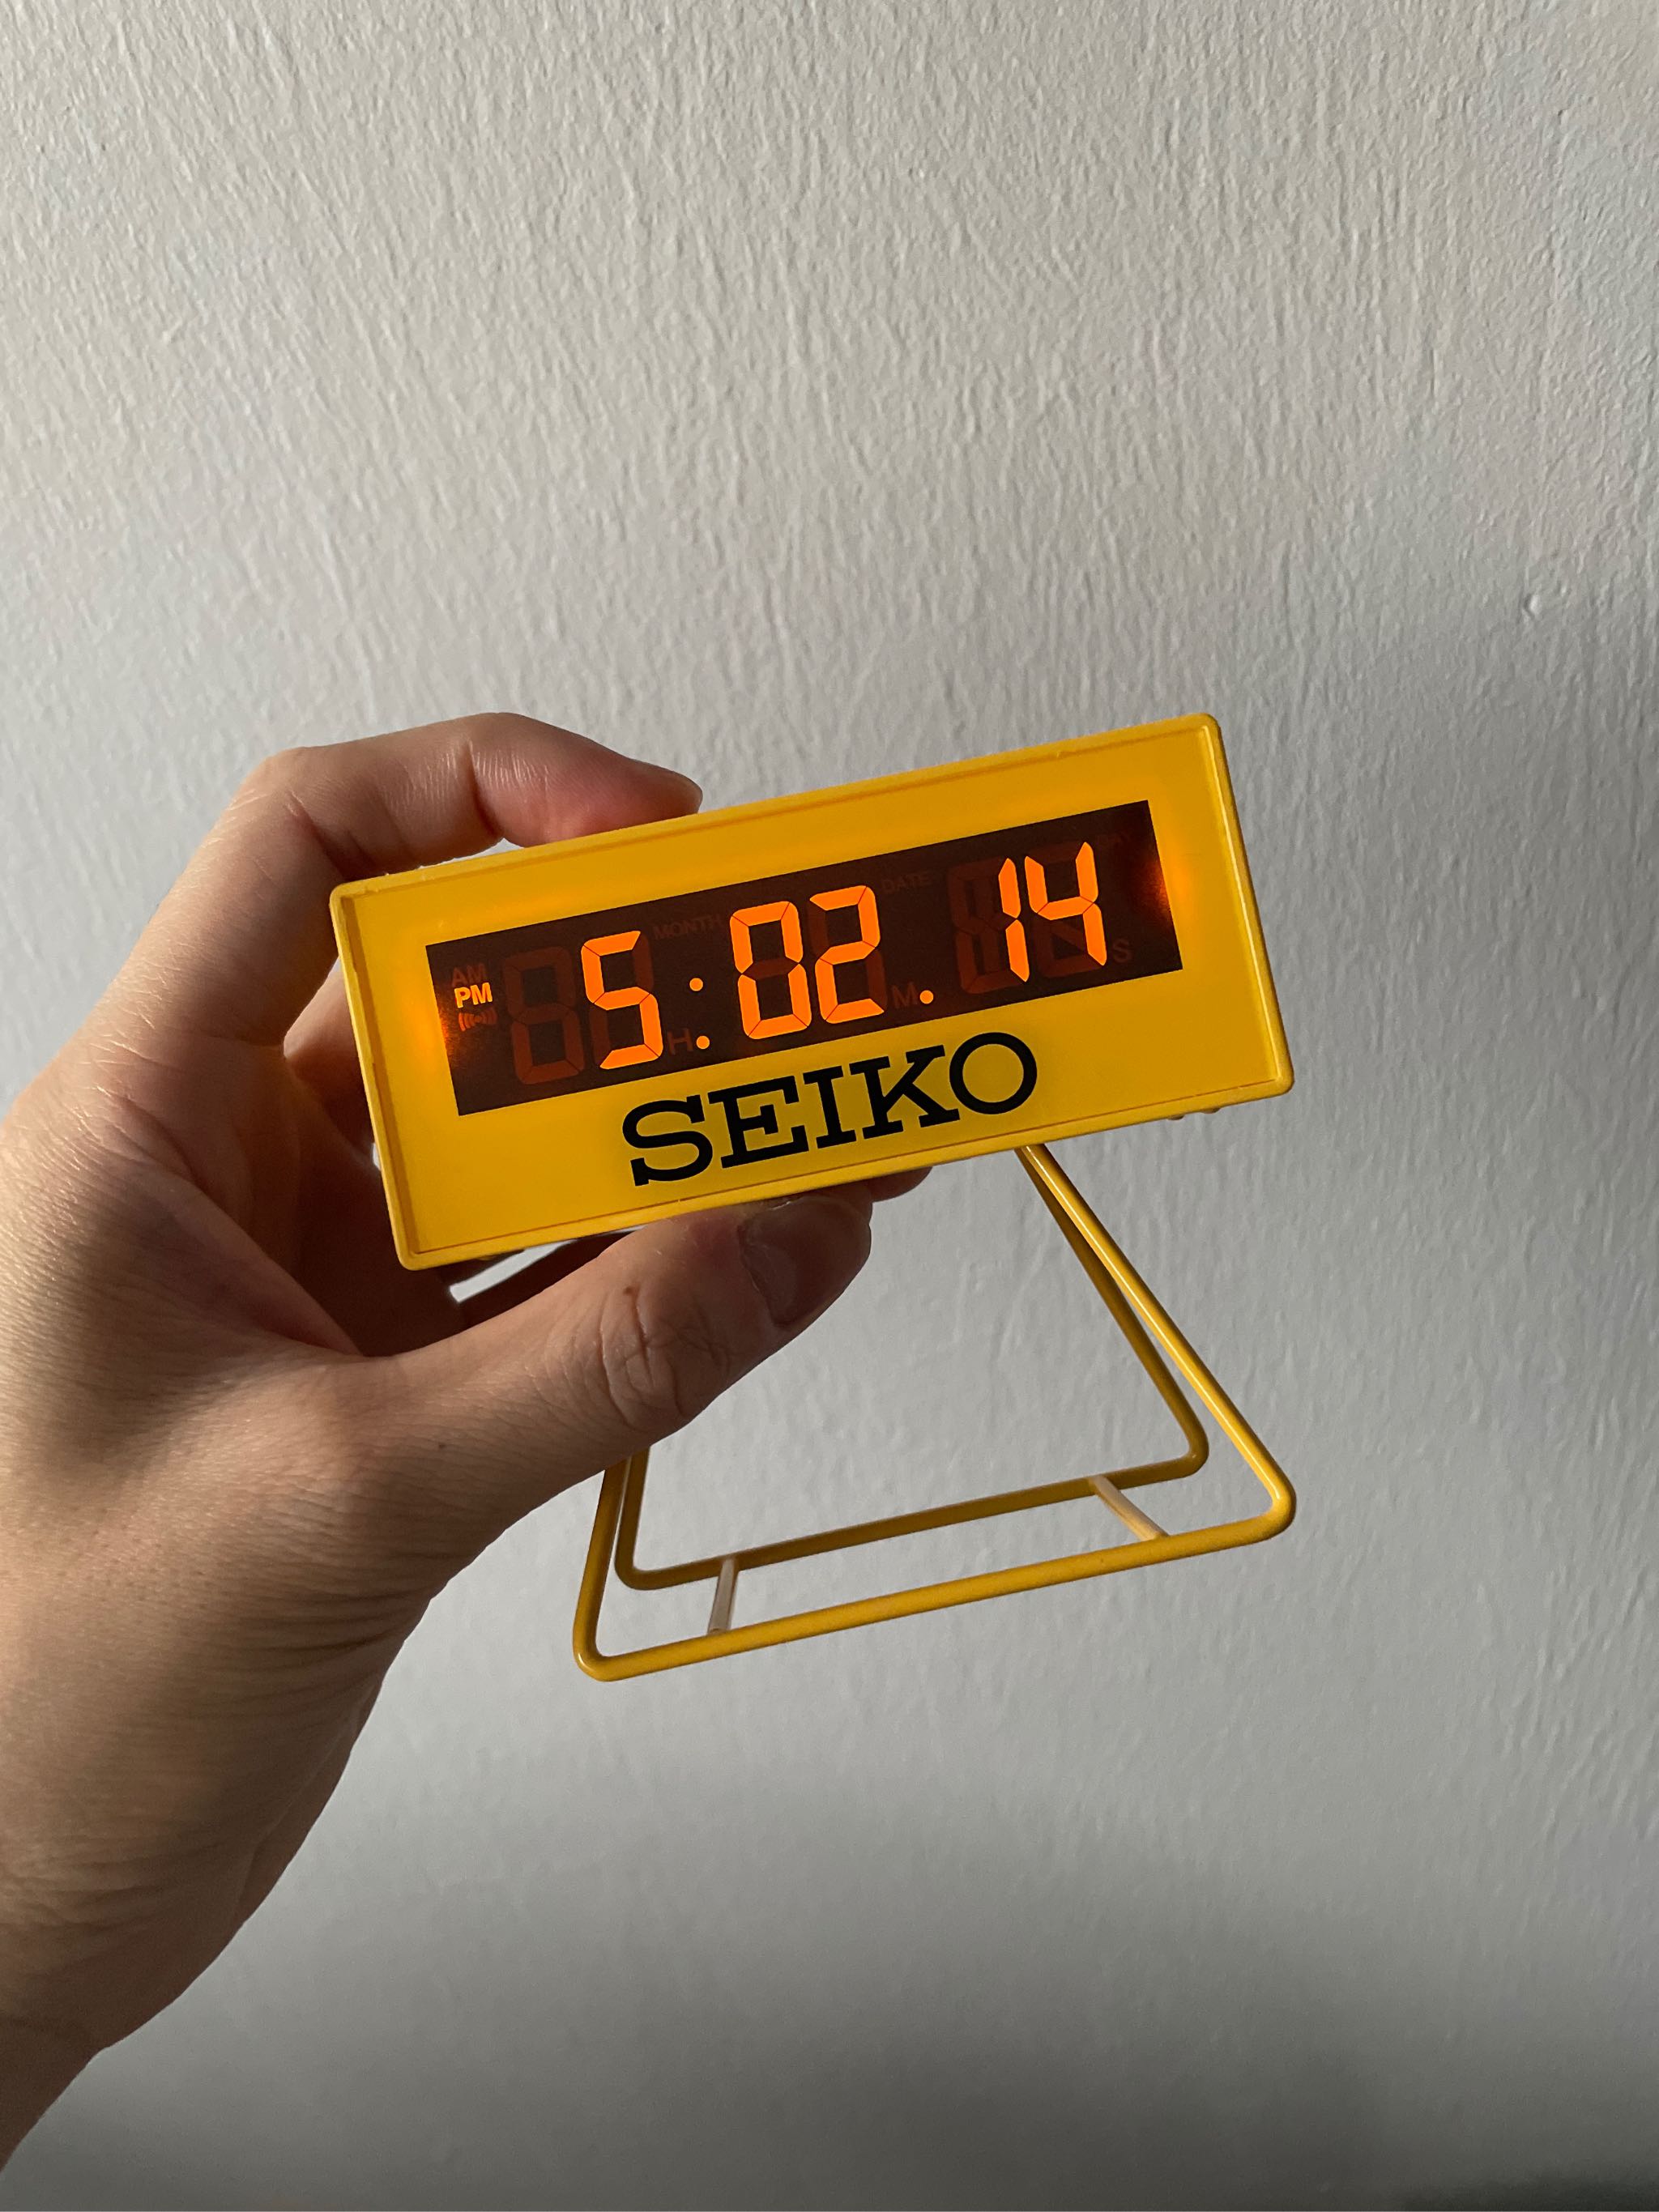 Seiko QHL062Y LCD Alarm Clock with countdown timer | Lazada Singapore